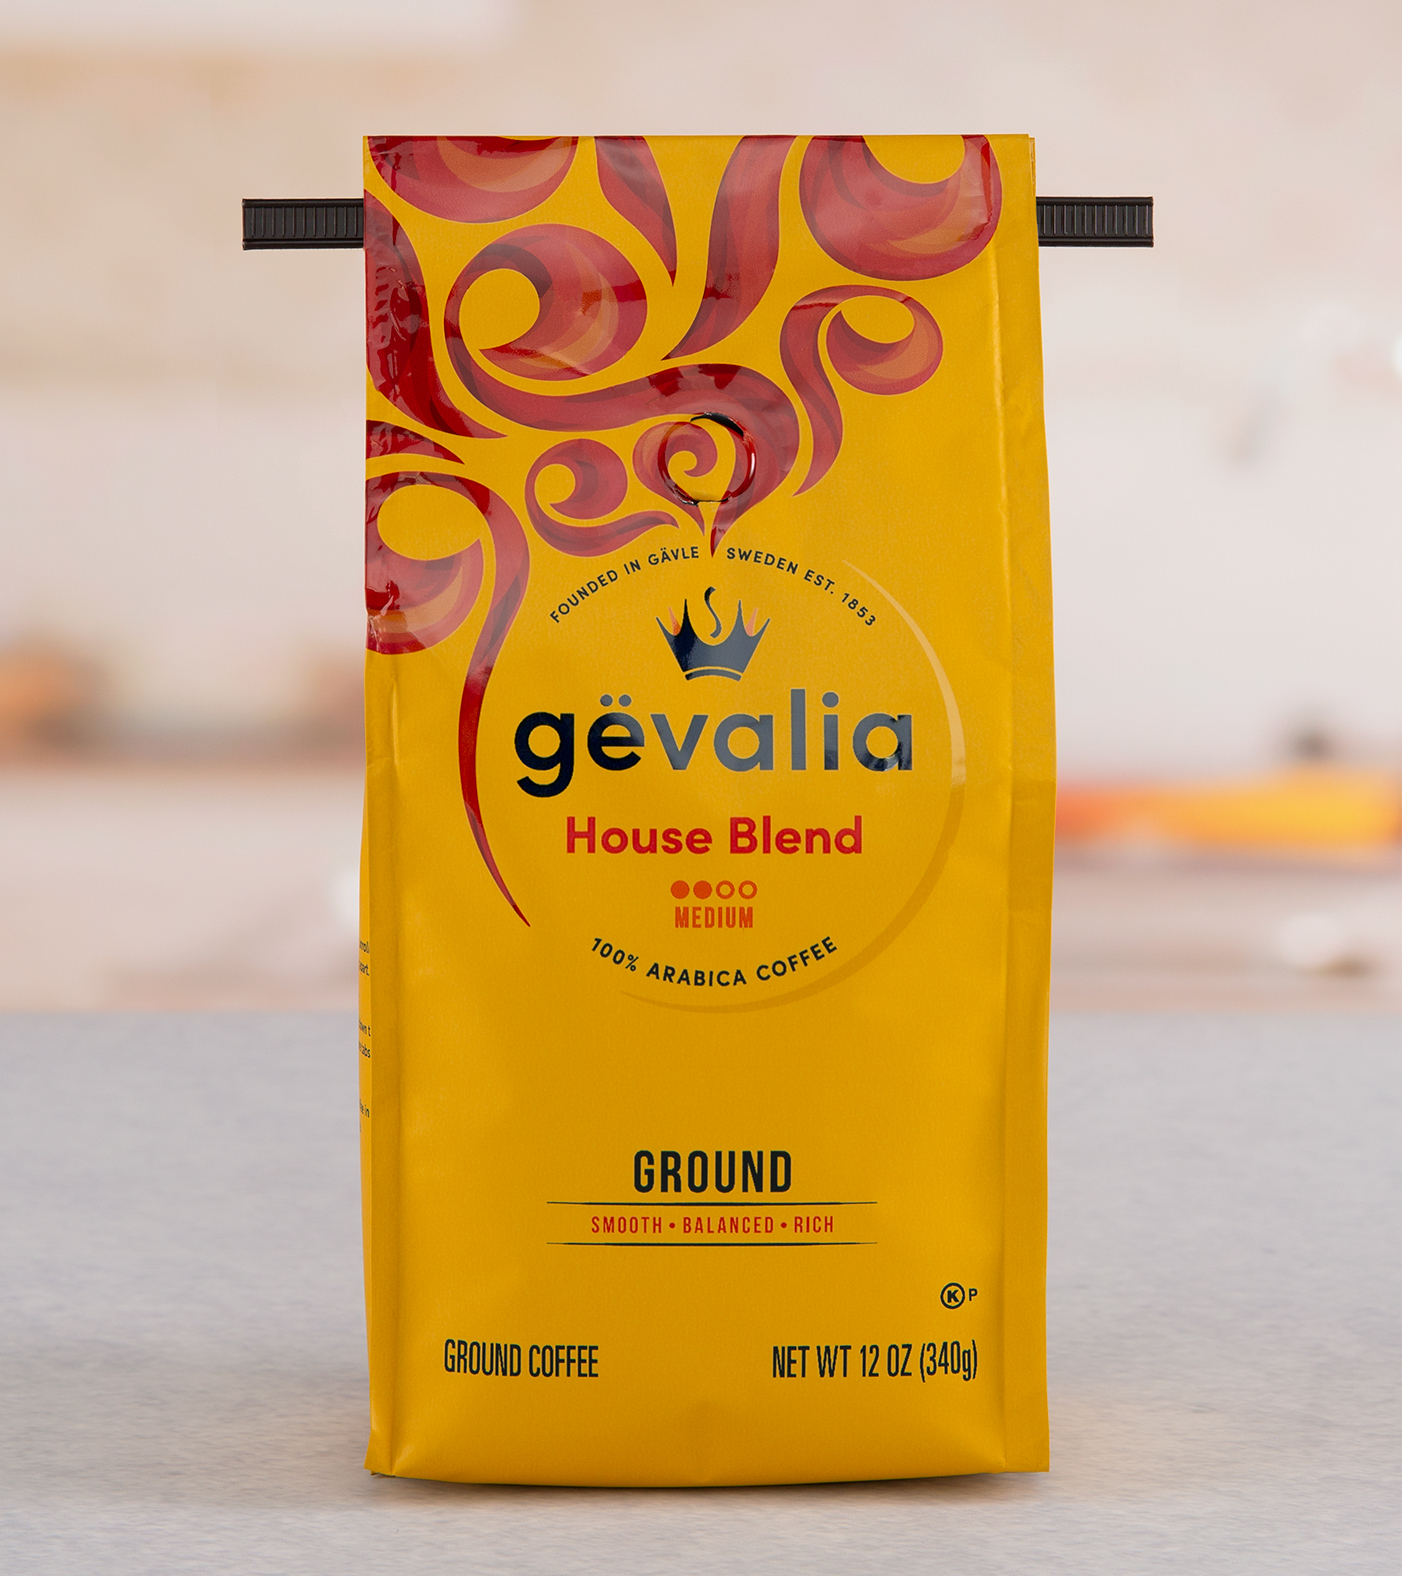 A yellow Gevalia brand coffee bag with tin tie closure